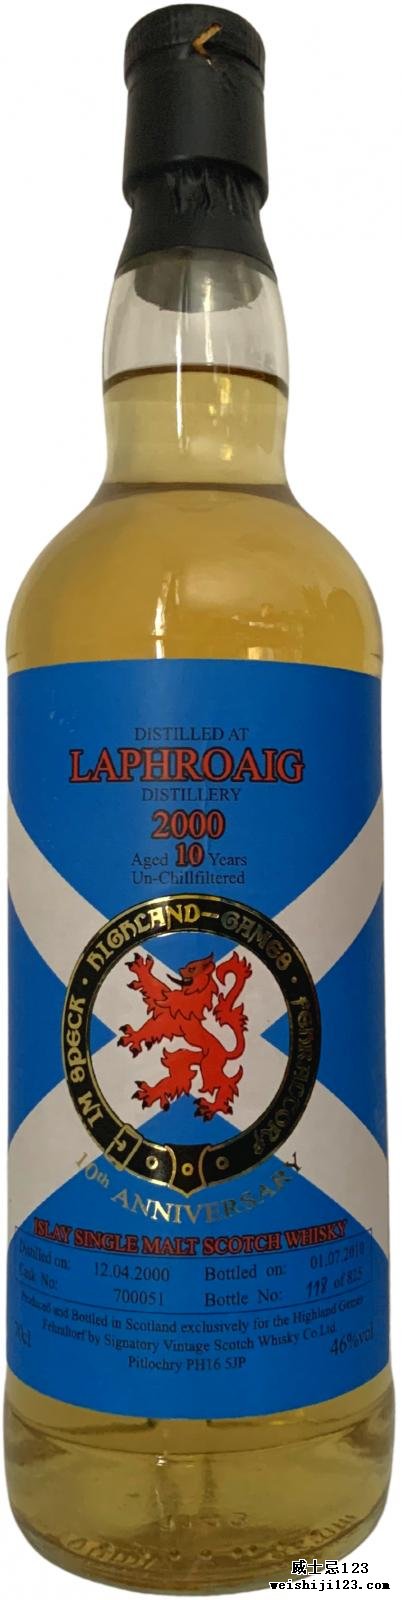 Laphroaig 2000 SV